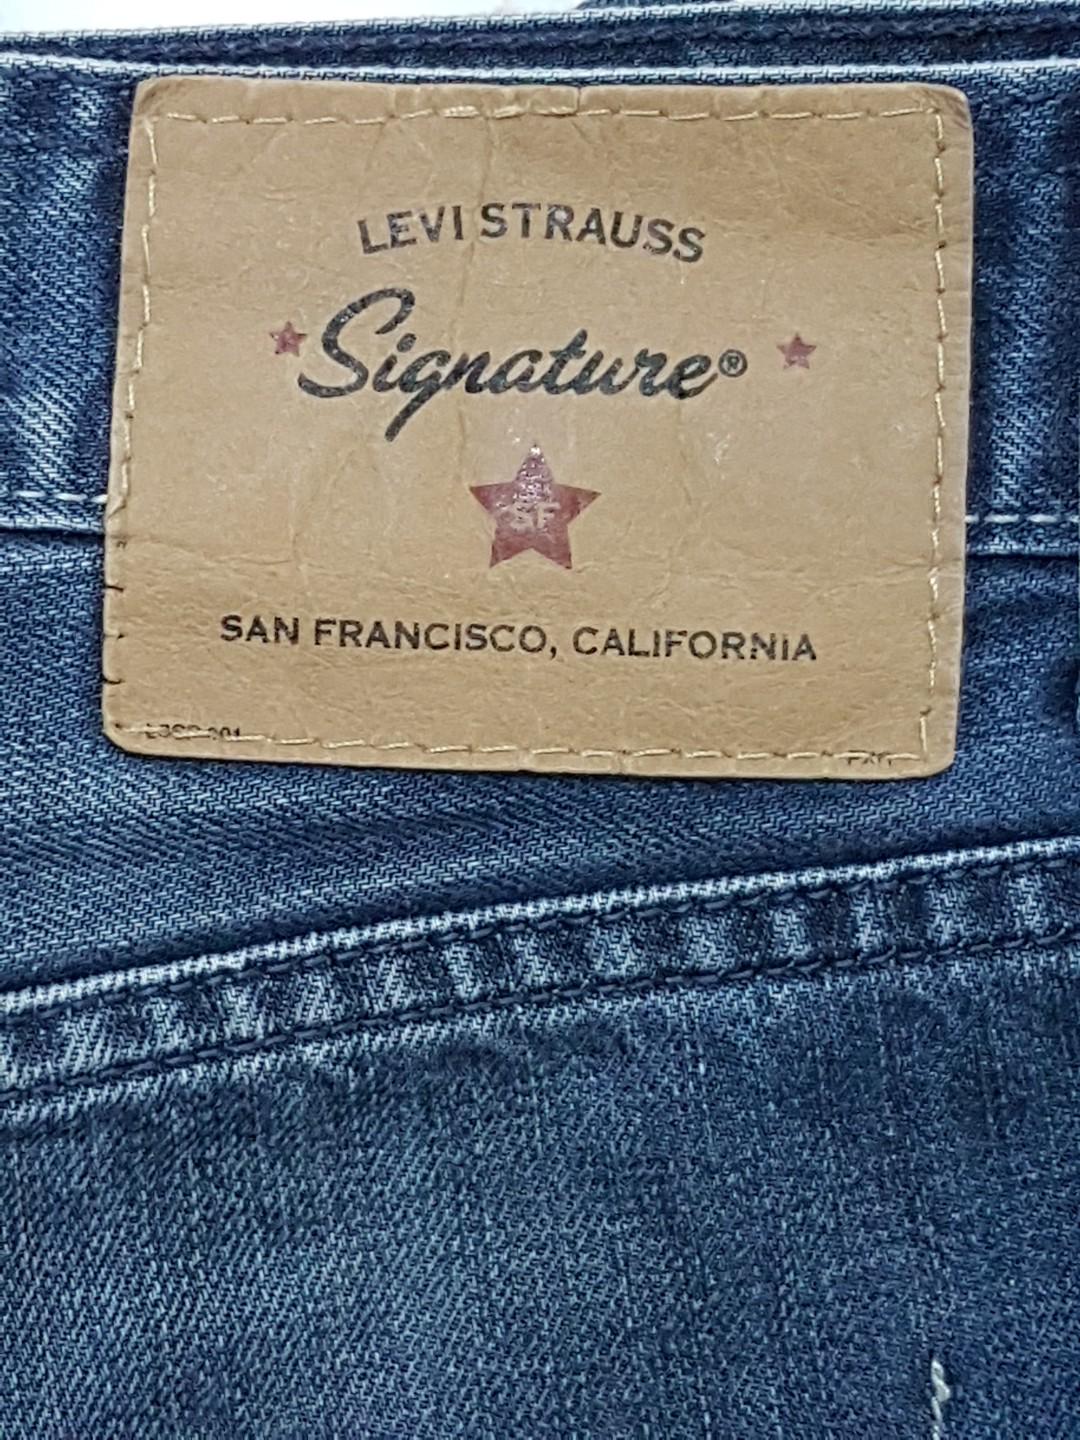 Levi's Strauss Signature jeans, Men's 